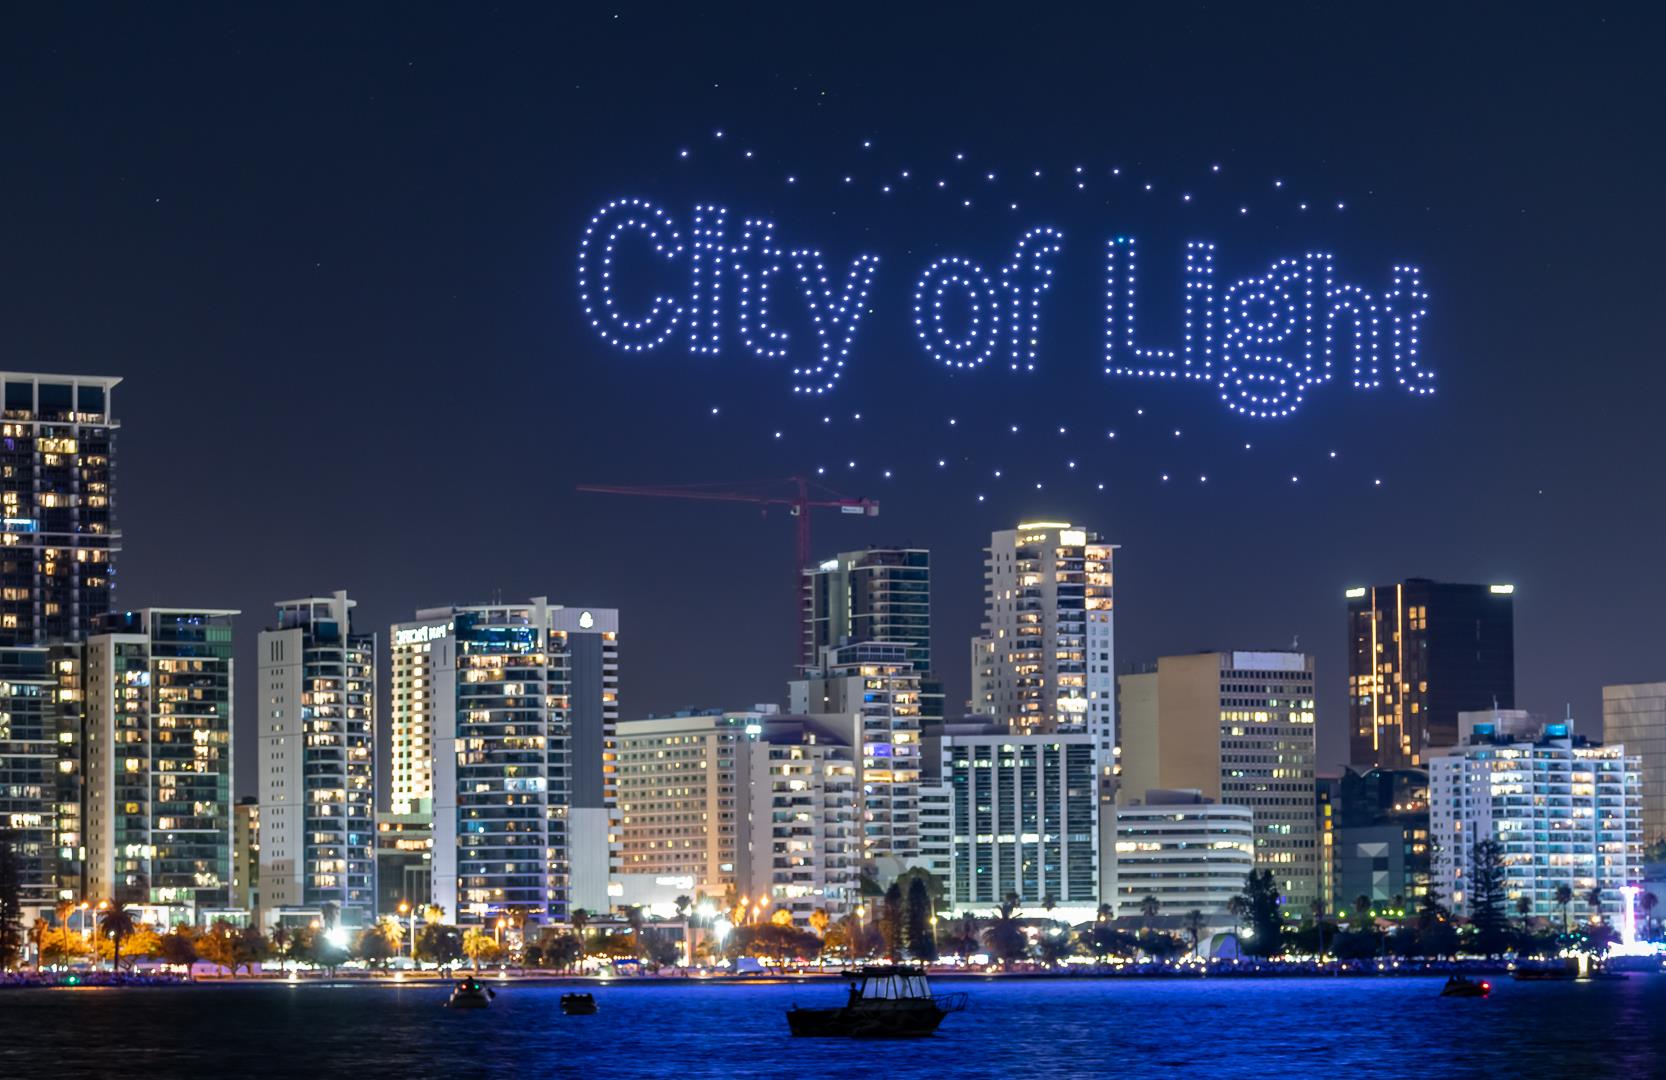 City of Light Drone Show